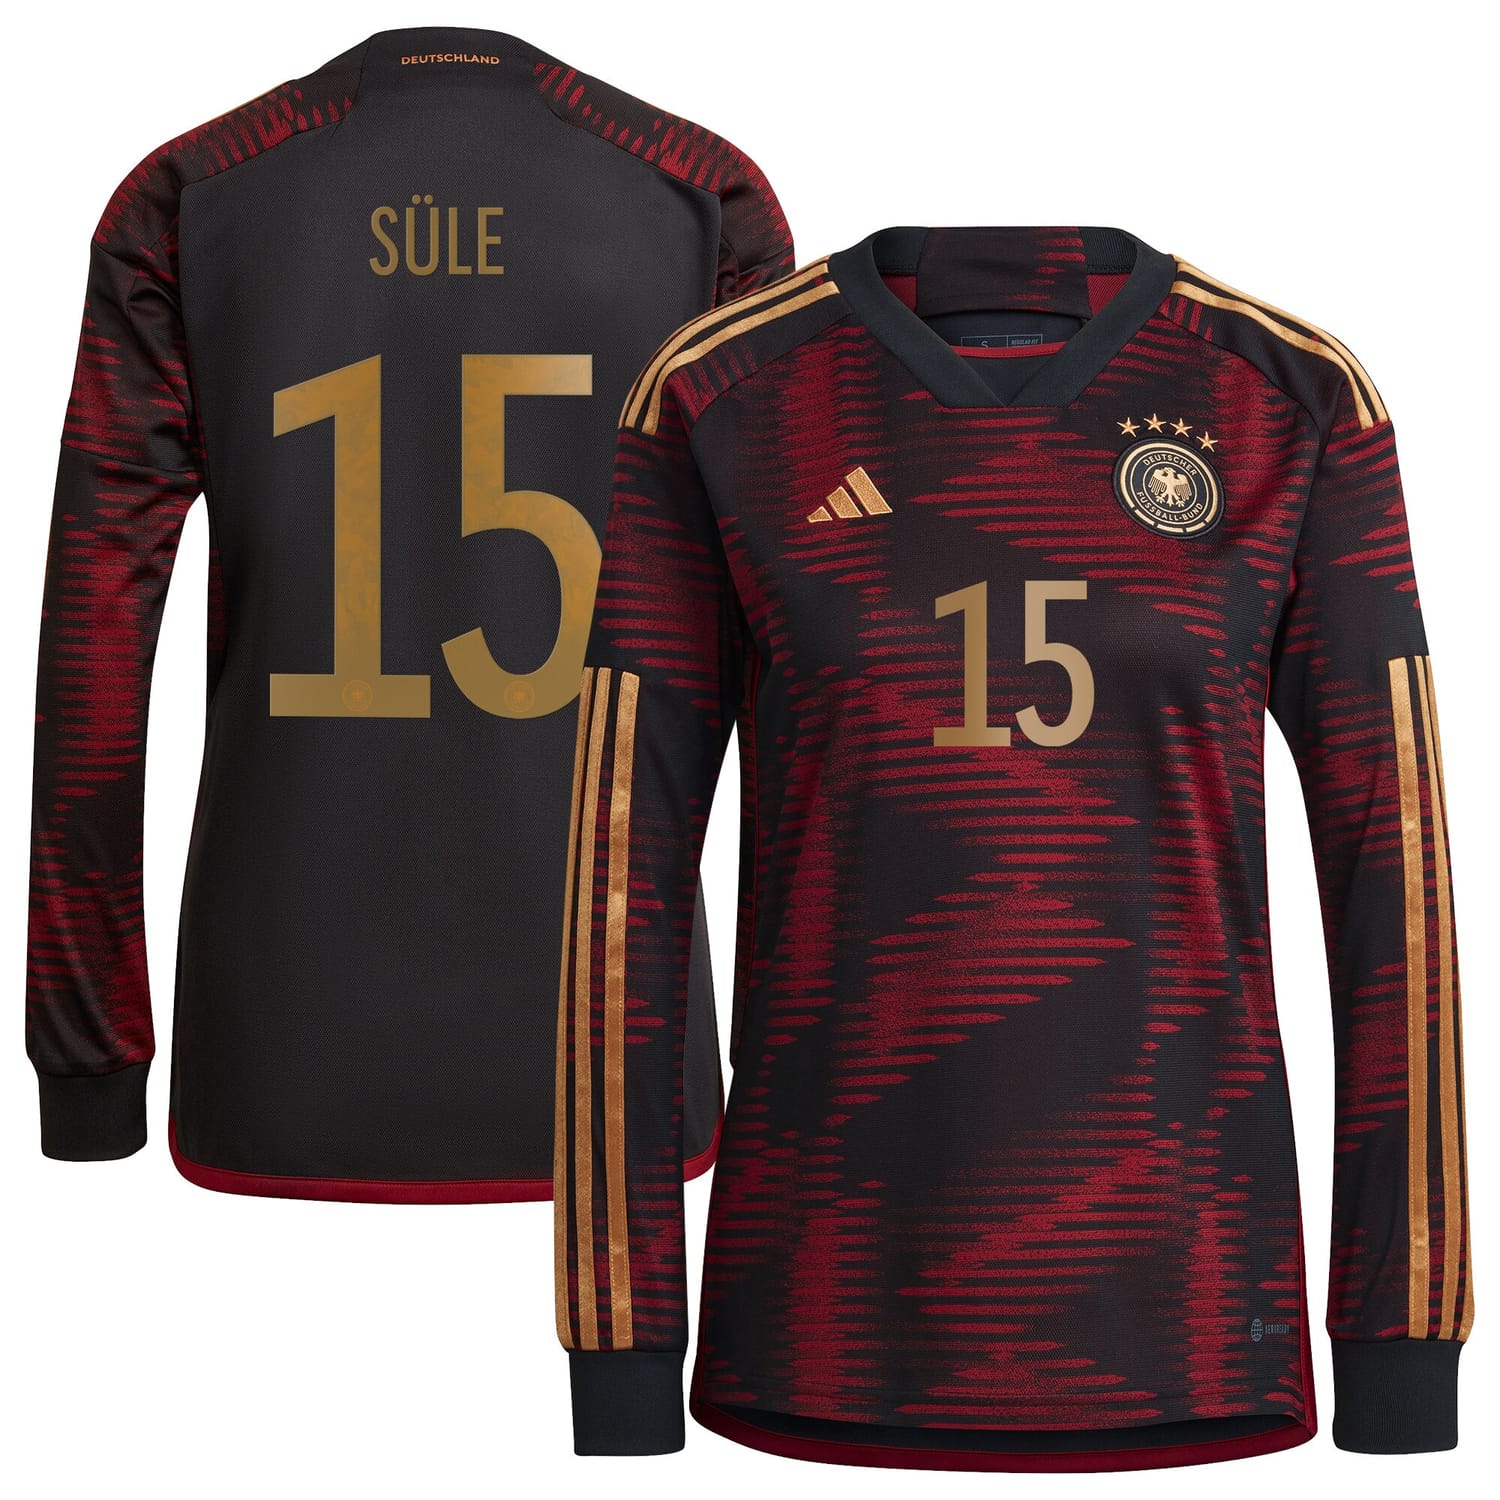 Germany National Team Away Jersey Shirt Long Sleeve player Niklas Süle 15 printing for Women